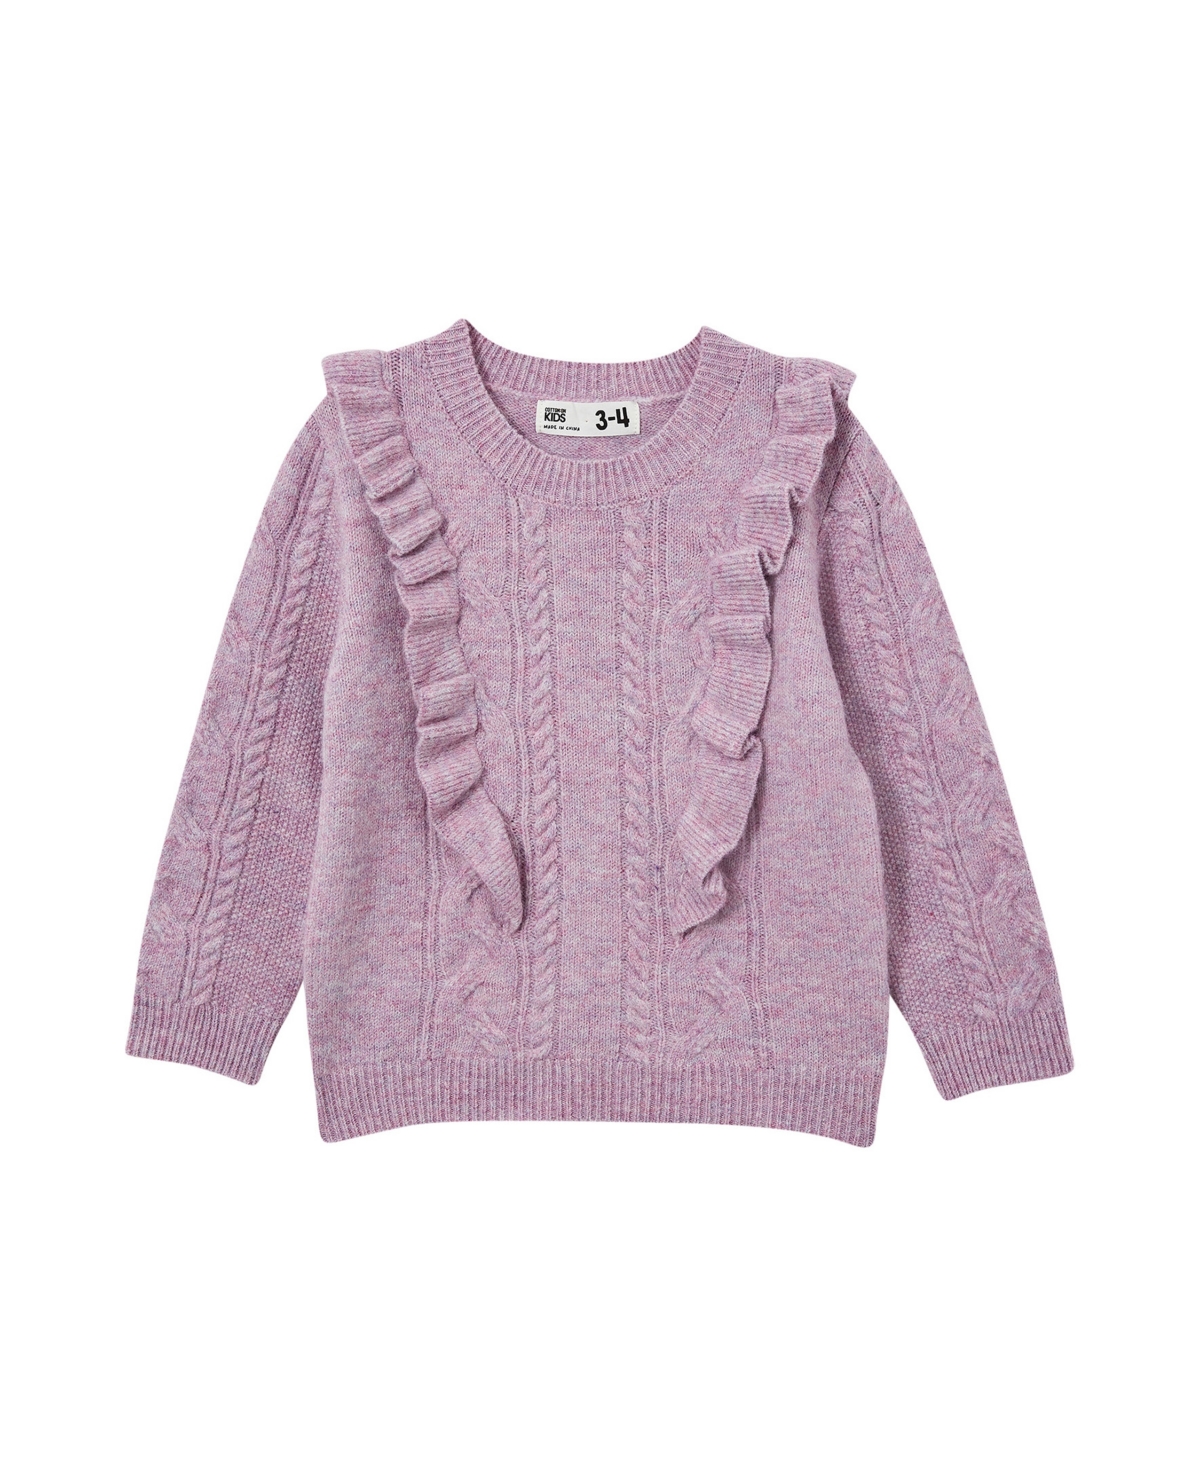 Cotton On Babies' Toddler Girls Lisa Sweater In Violet Marle